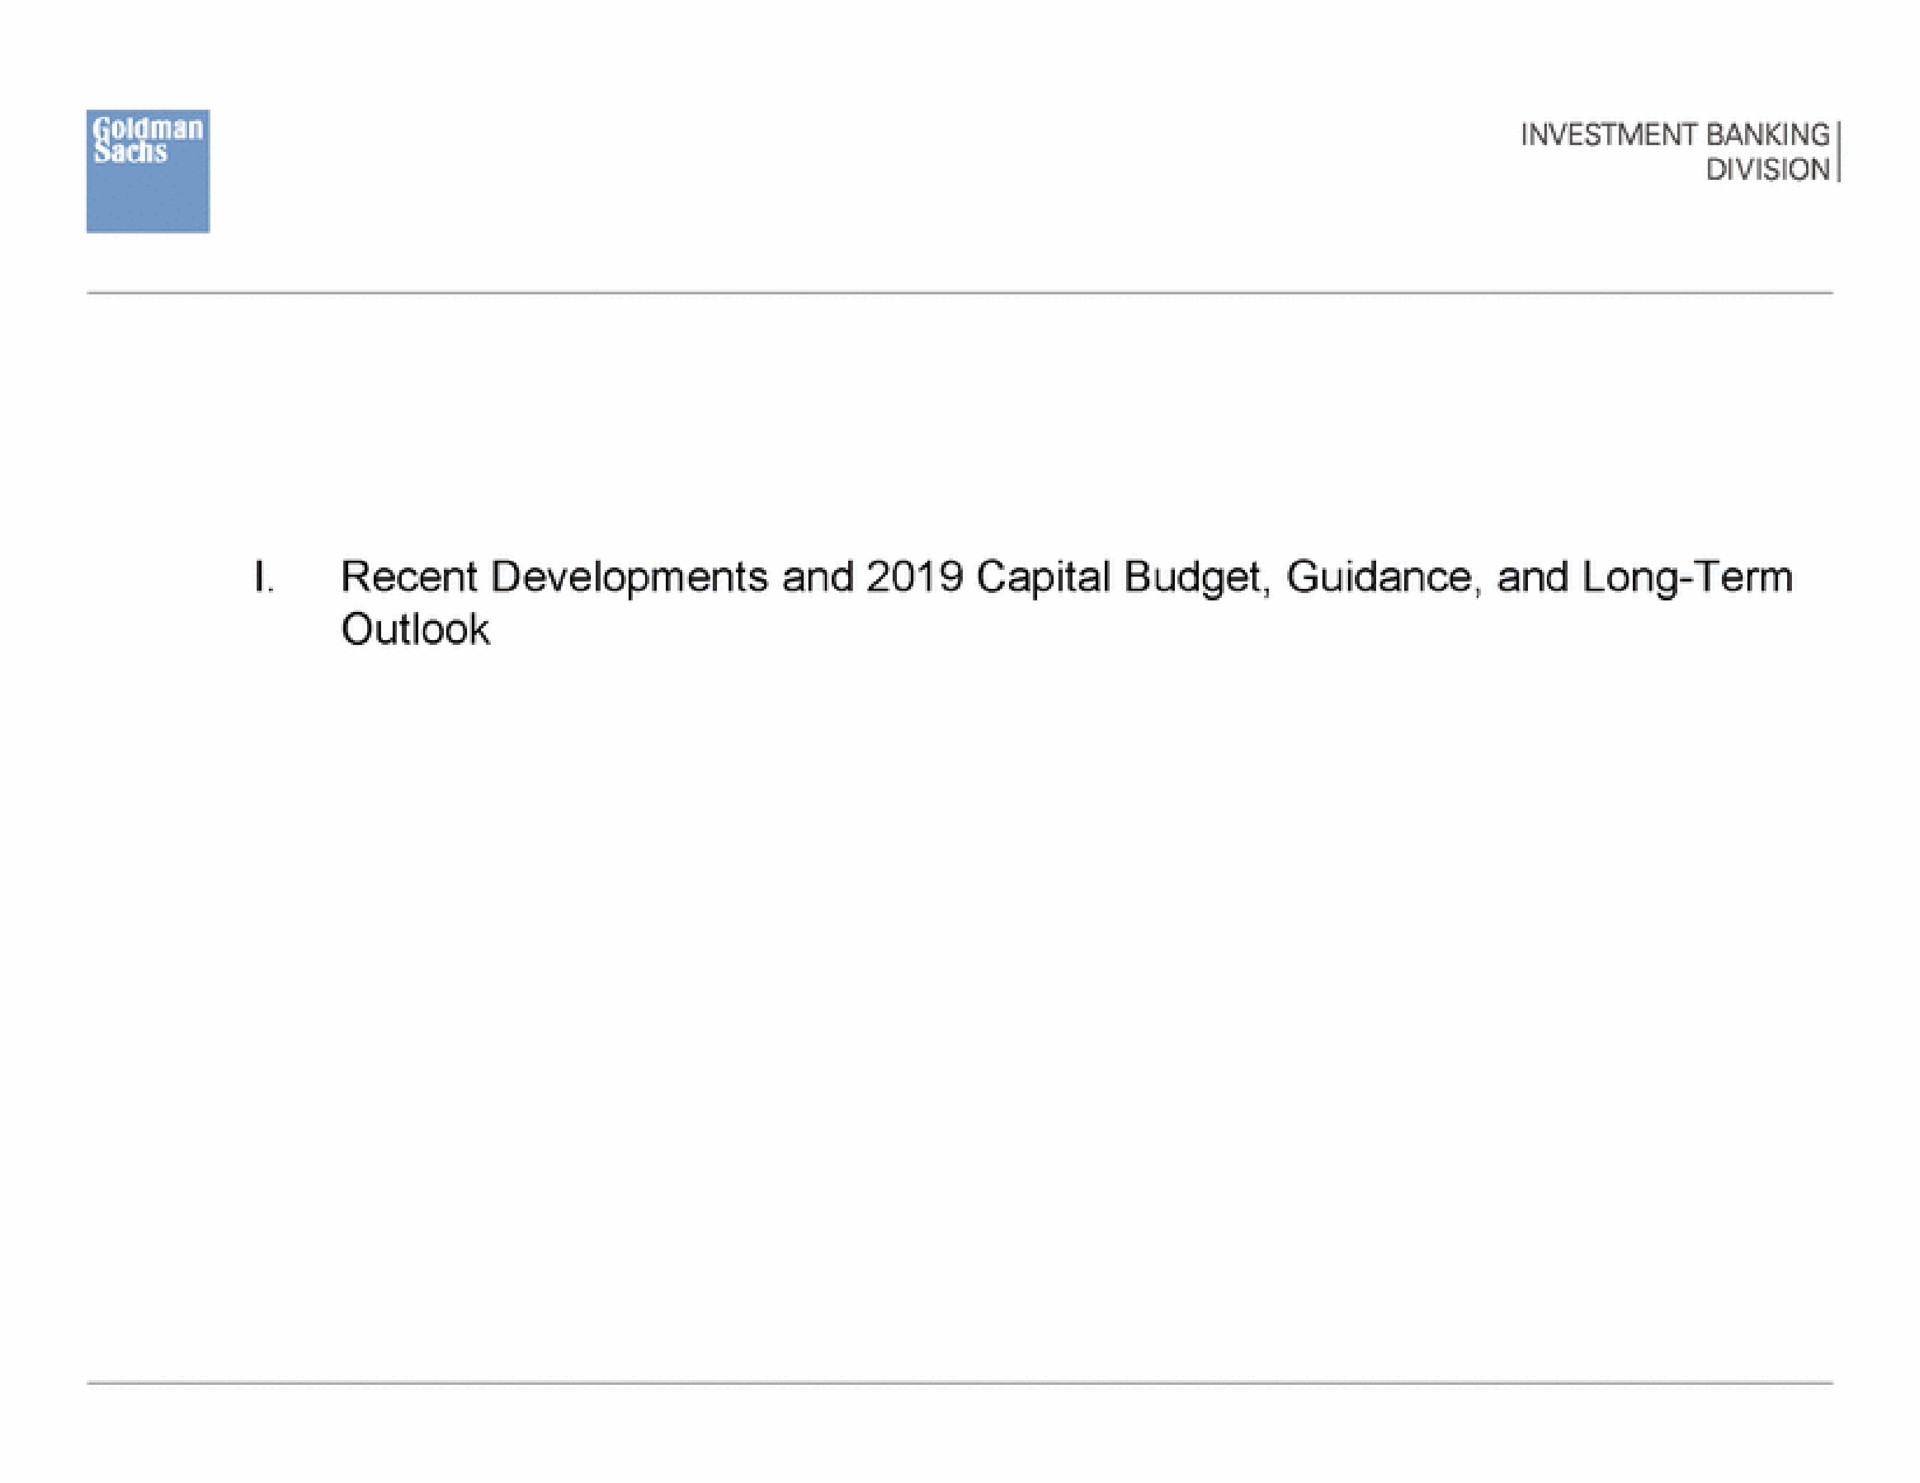 recent developments and capital budget guidance and long term outlook | Goldman Sachs